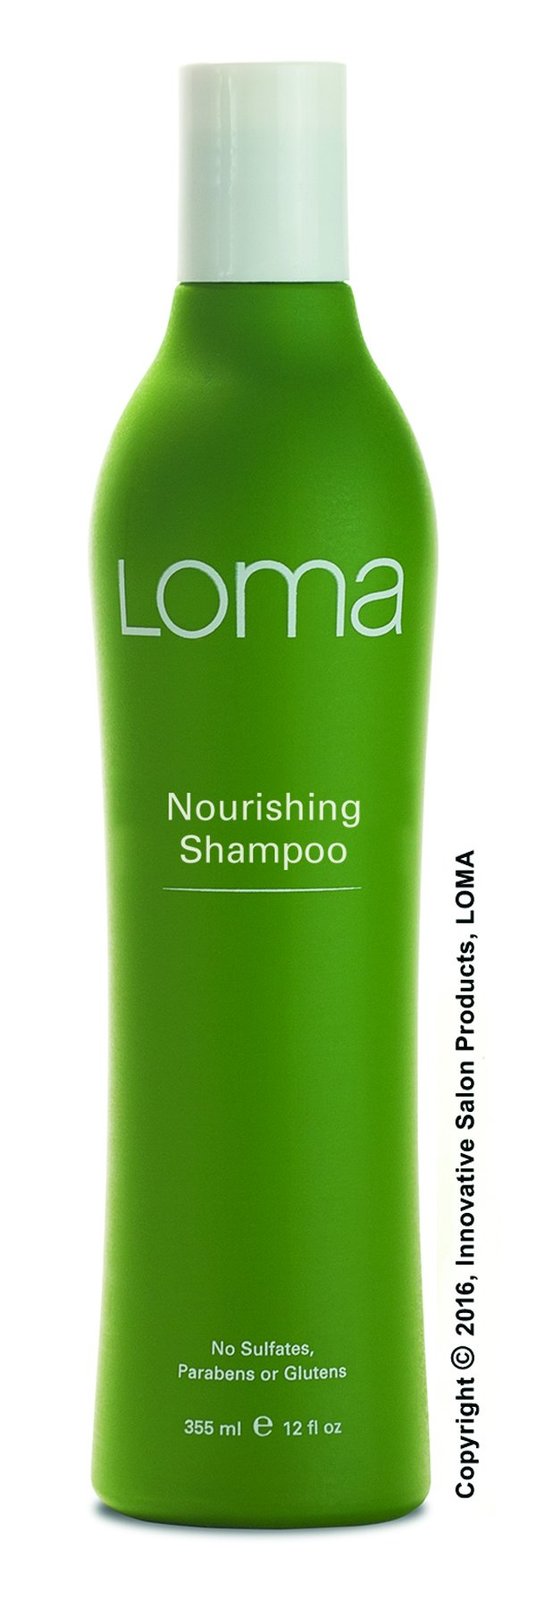 Loma Nourishing Shampoo, 12 Fl Oz - $25.41